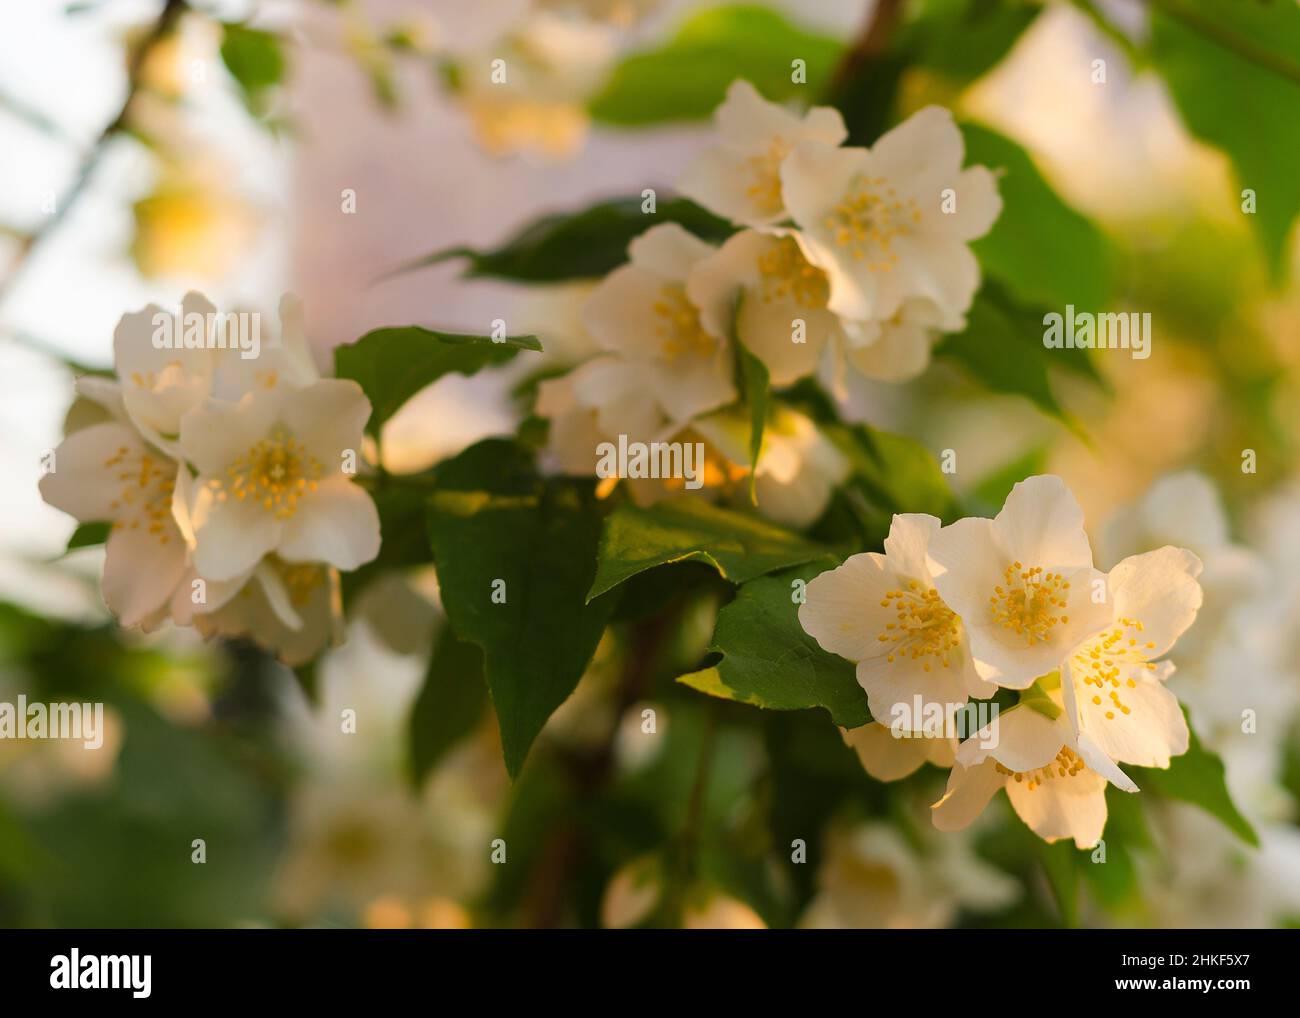 Blooming and fragrant jasmine flowers. Blooming jasmine bush Stock Photo